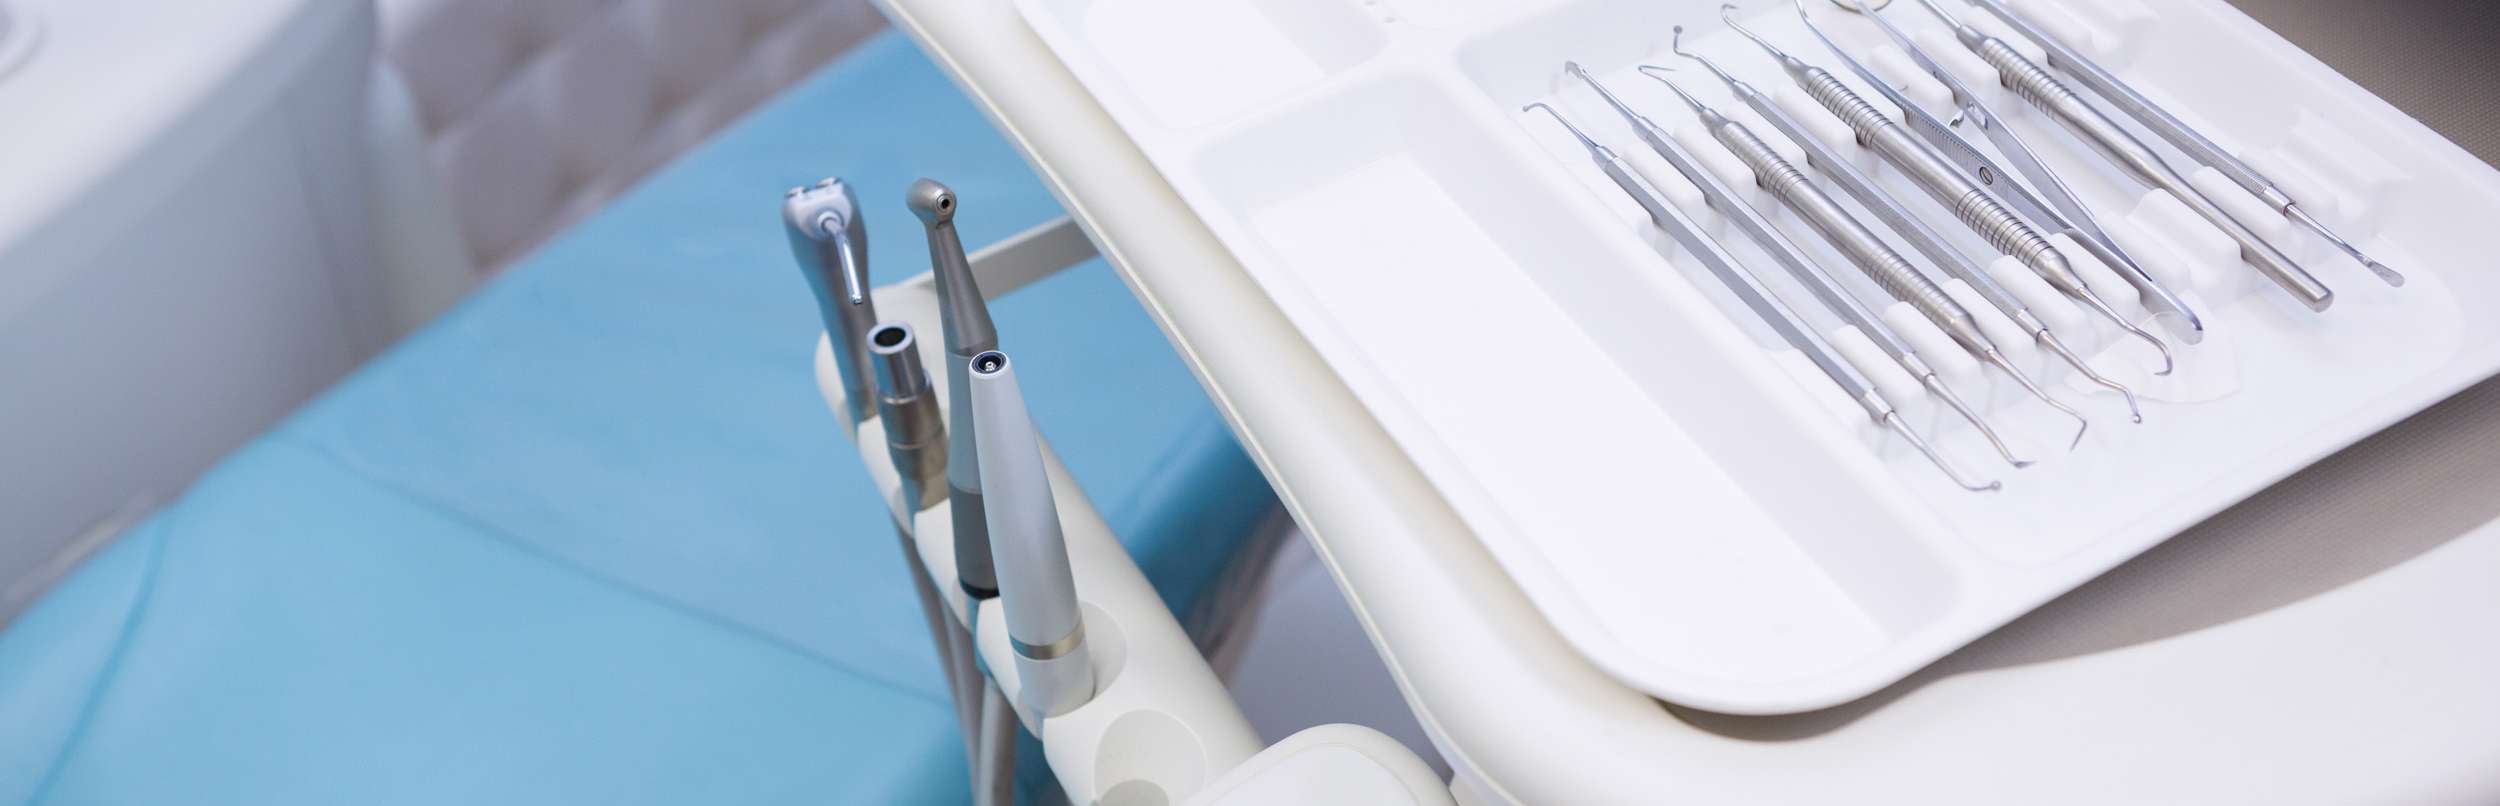 dental equipment at clinic